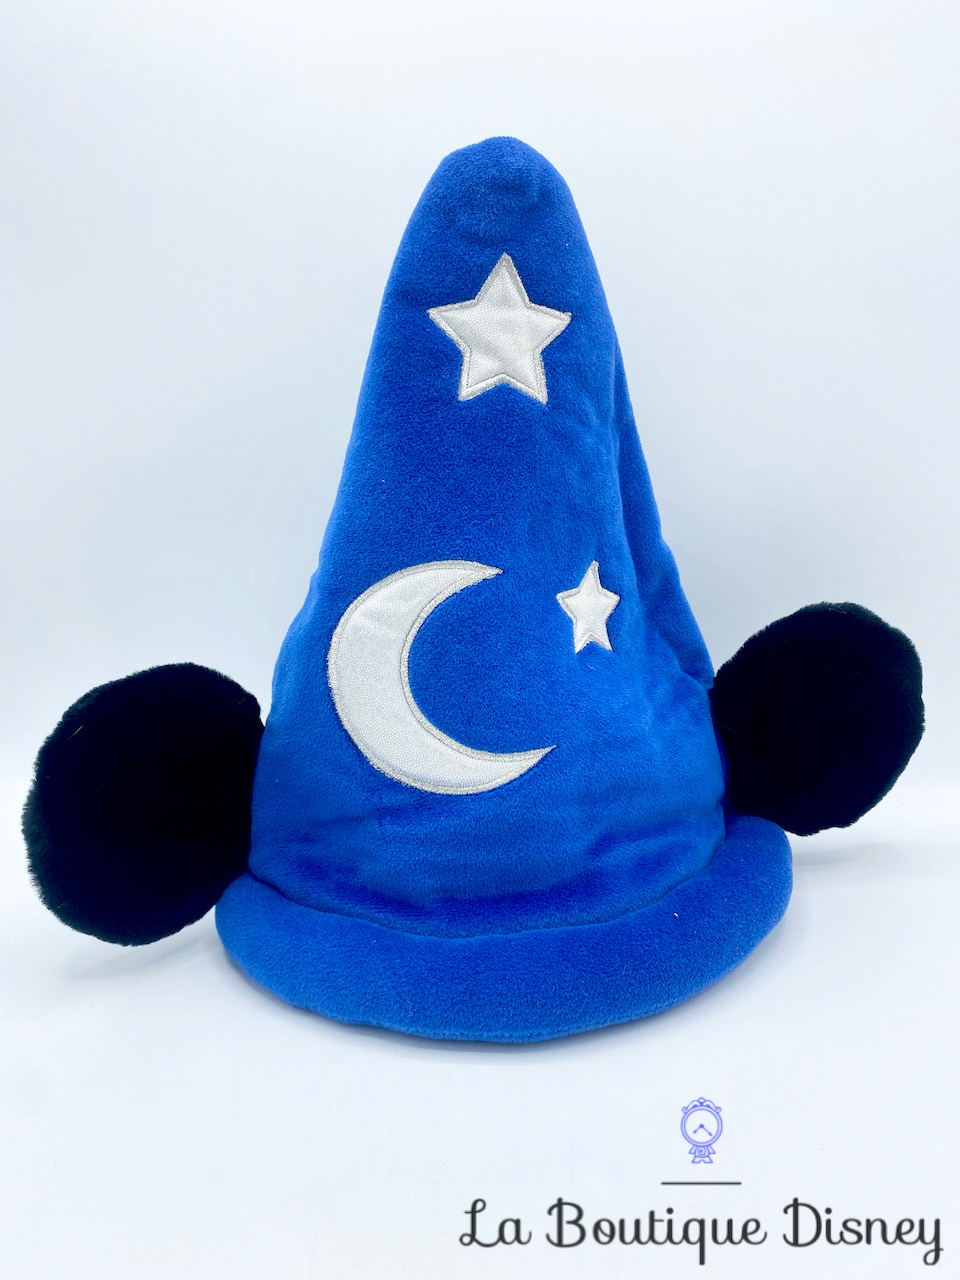 Chapeau Mickey Fantasia Disneyland Paris Disney bleu oreilles lune étoiles